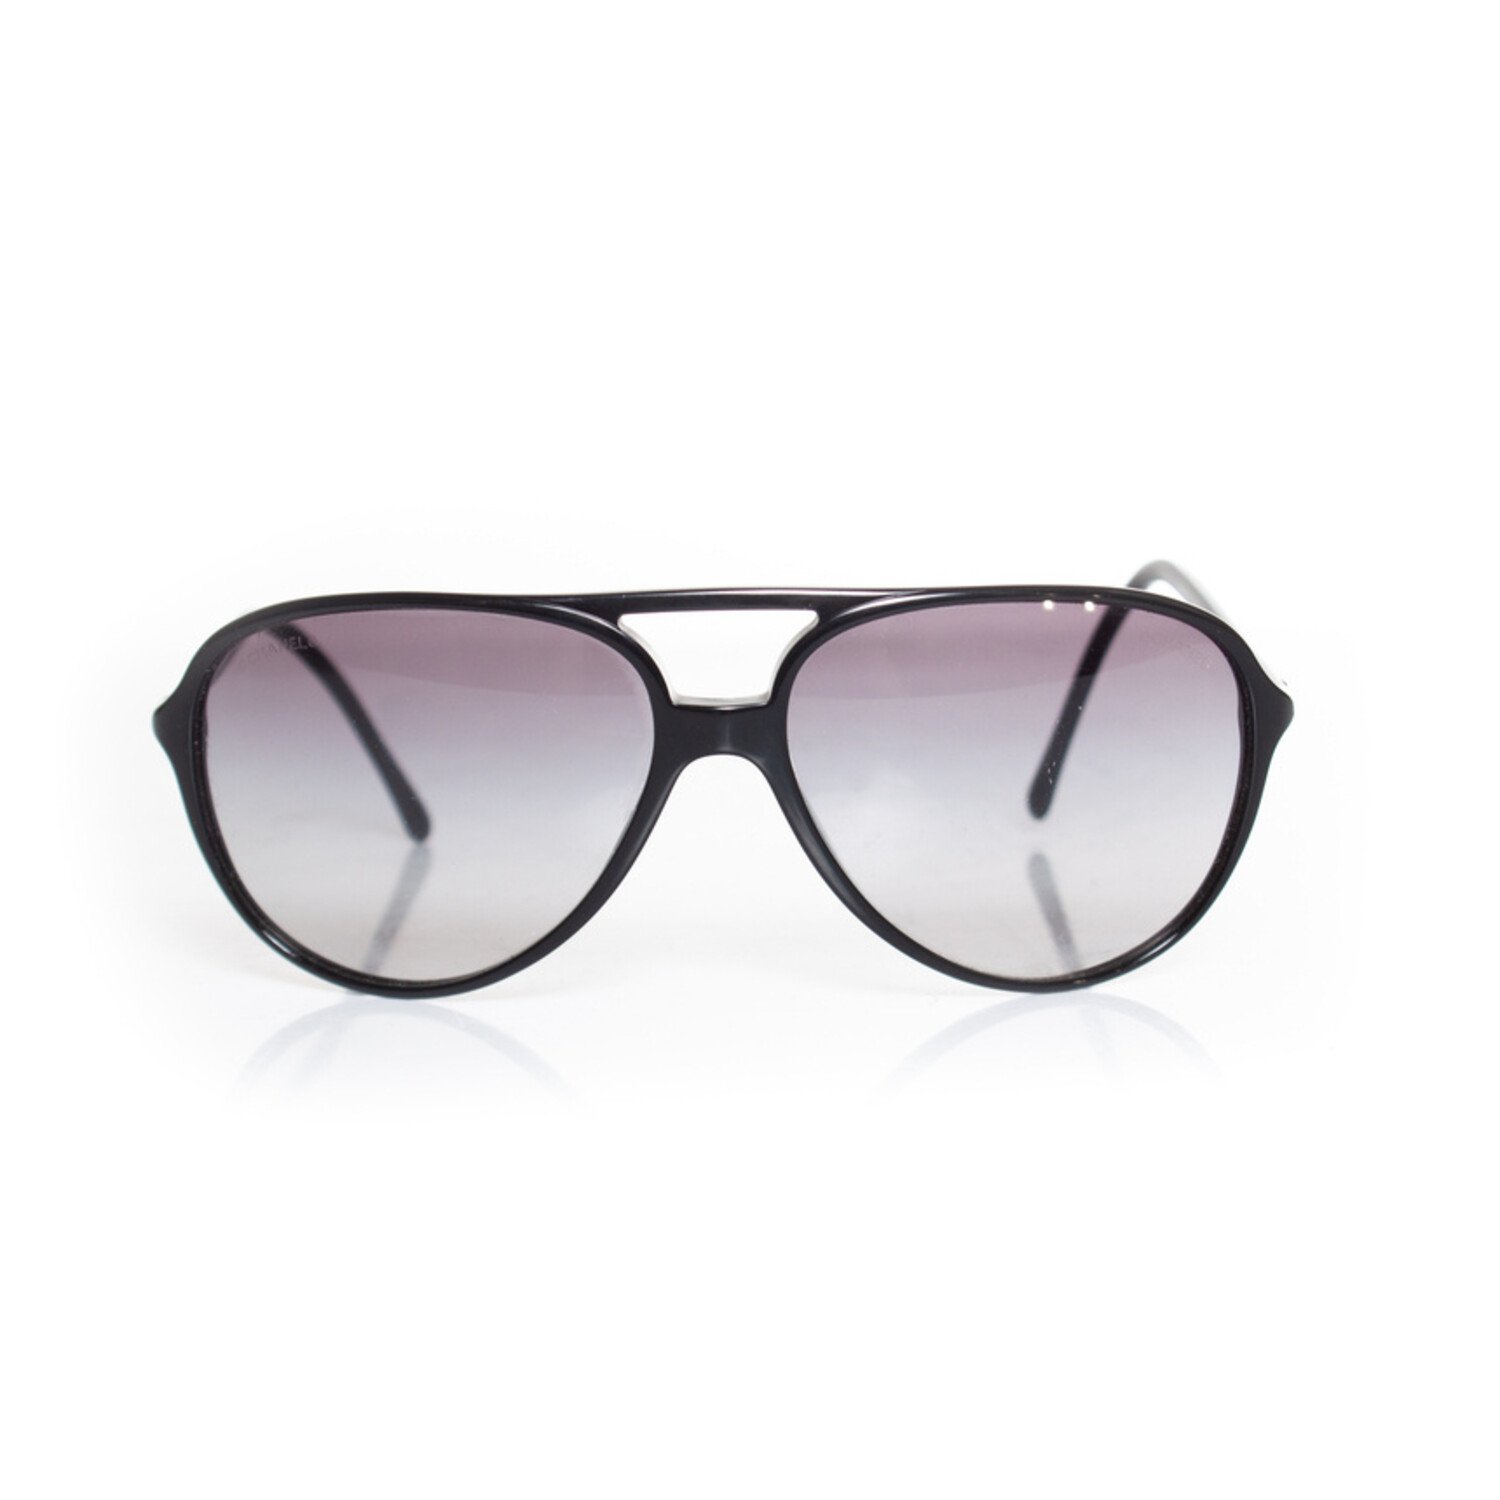 CHANEL Lambskin Aviator Chain Sunglasses 4194-Q Black 234007